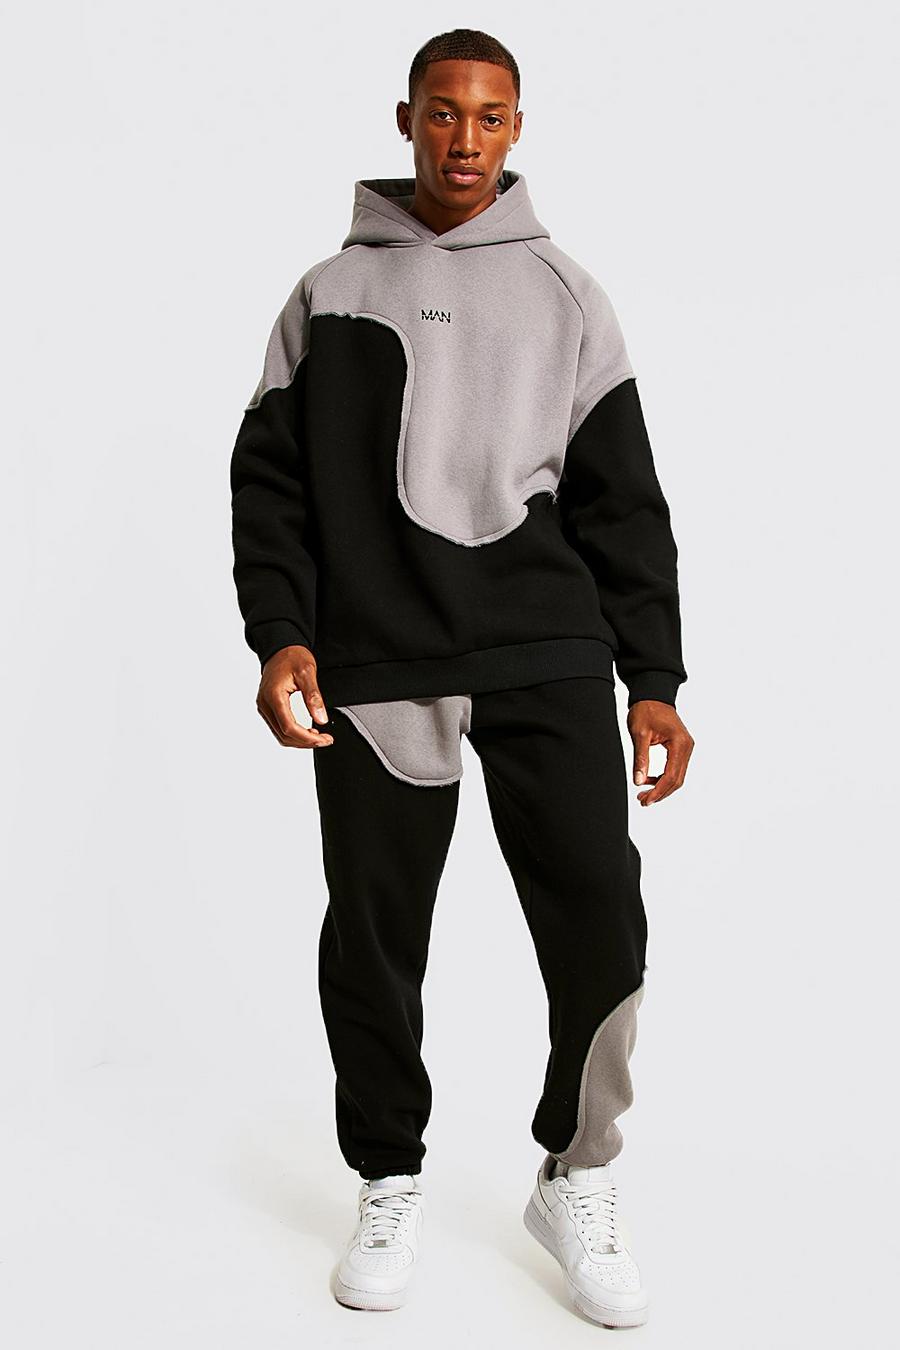 Gespleißter Oversize Man Trainingsanzug mit Kapuze, Charcoal gris